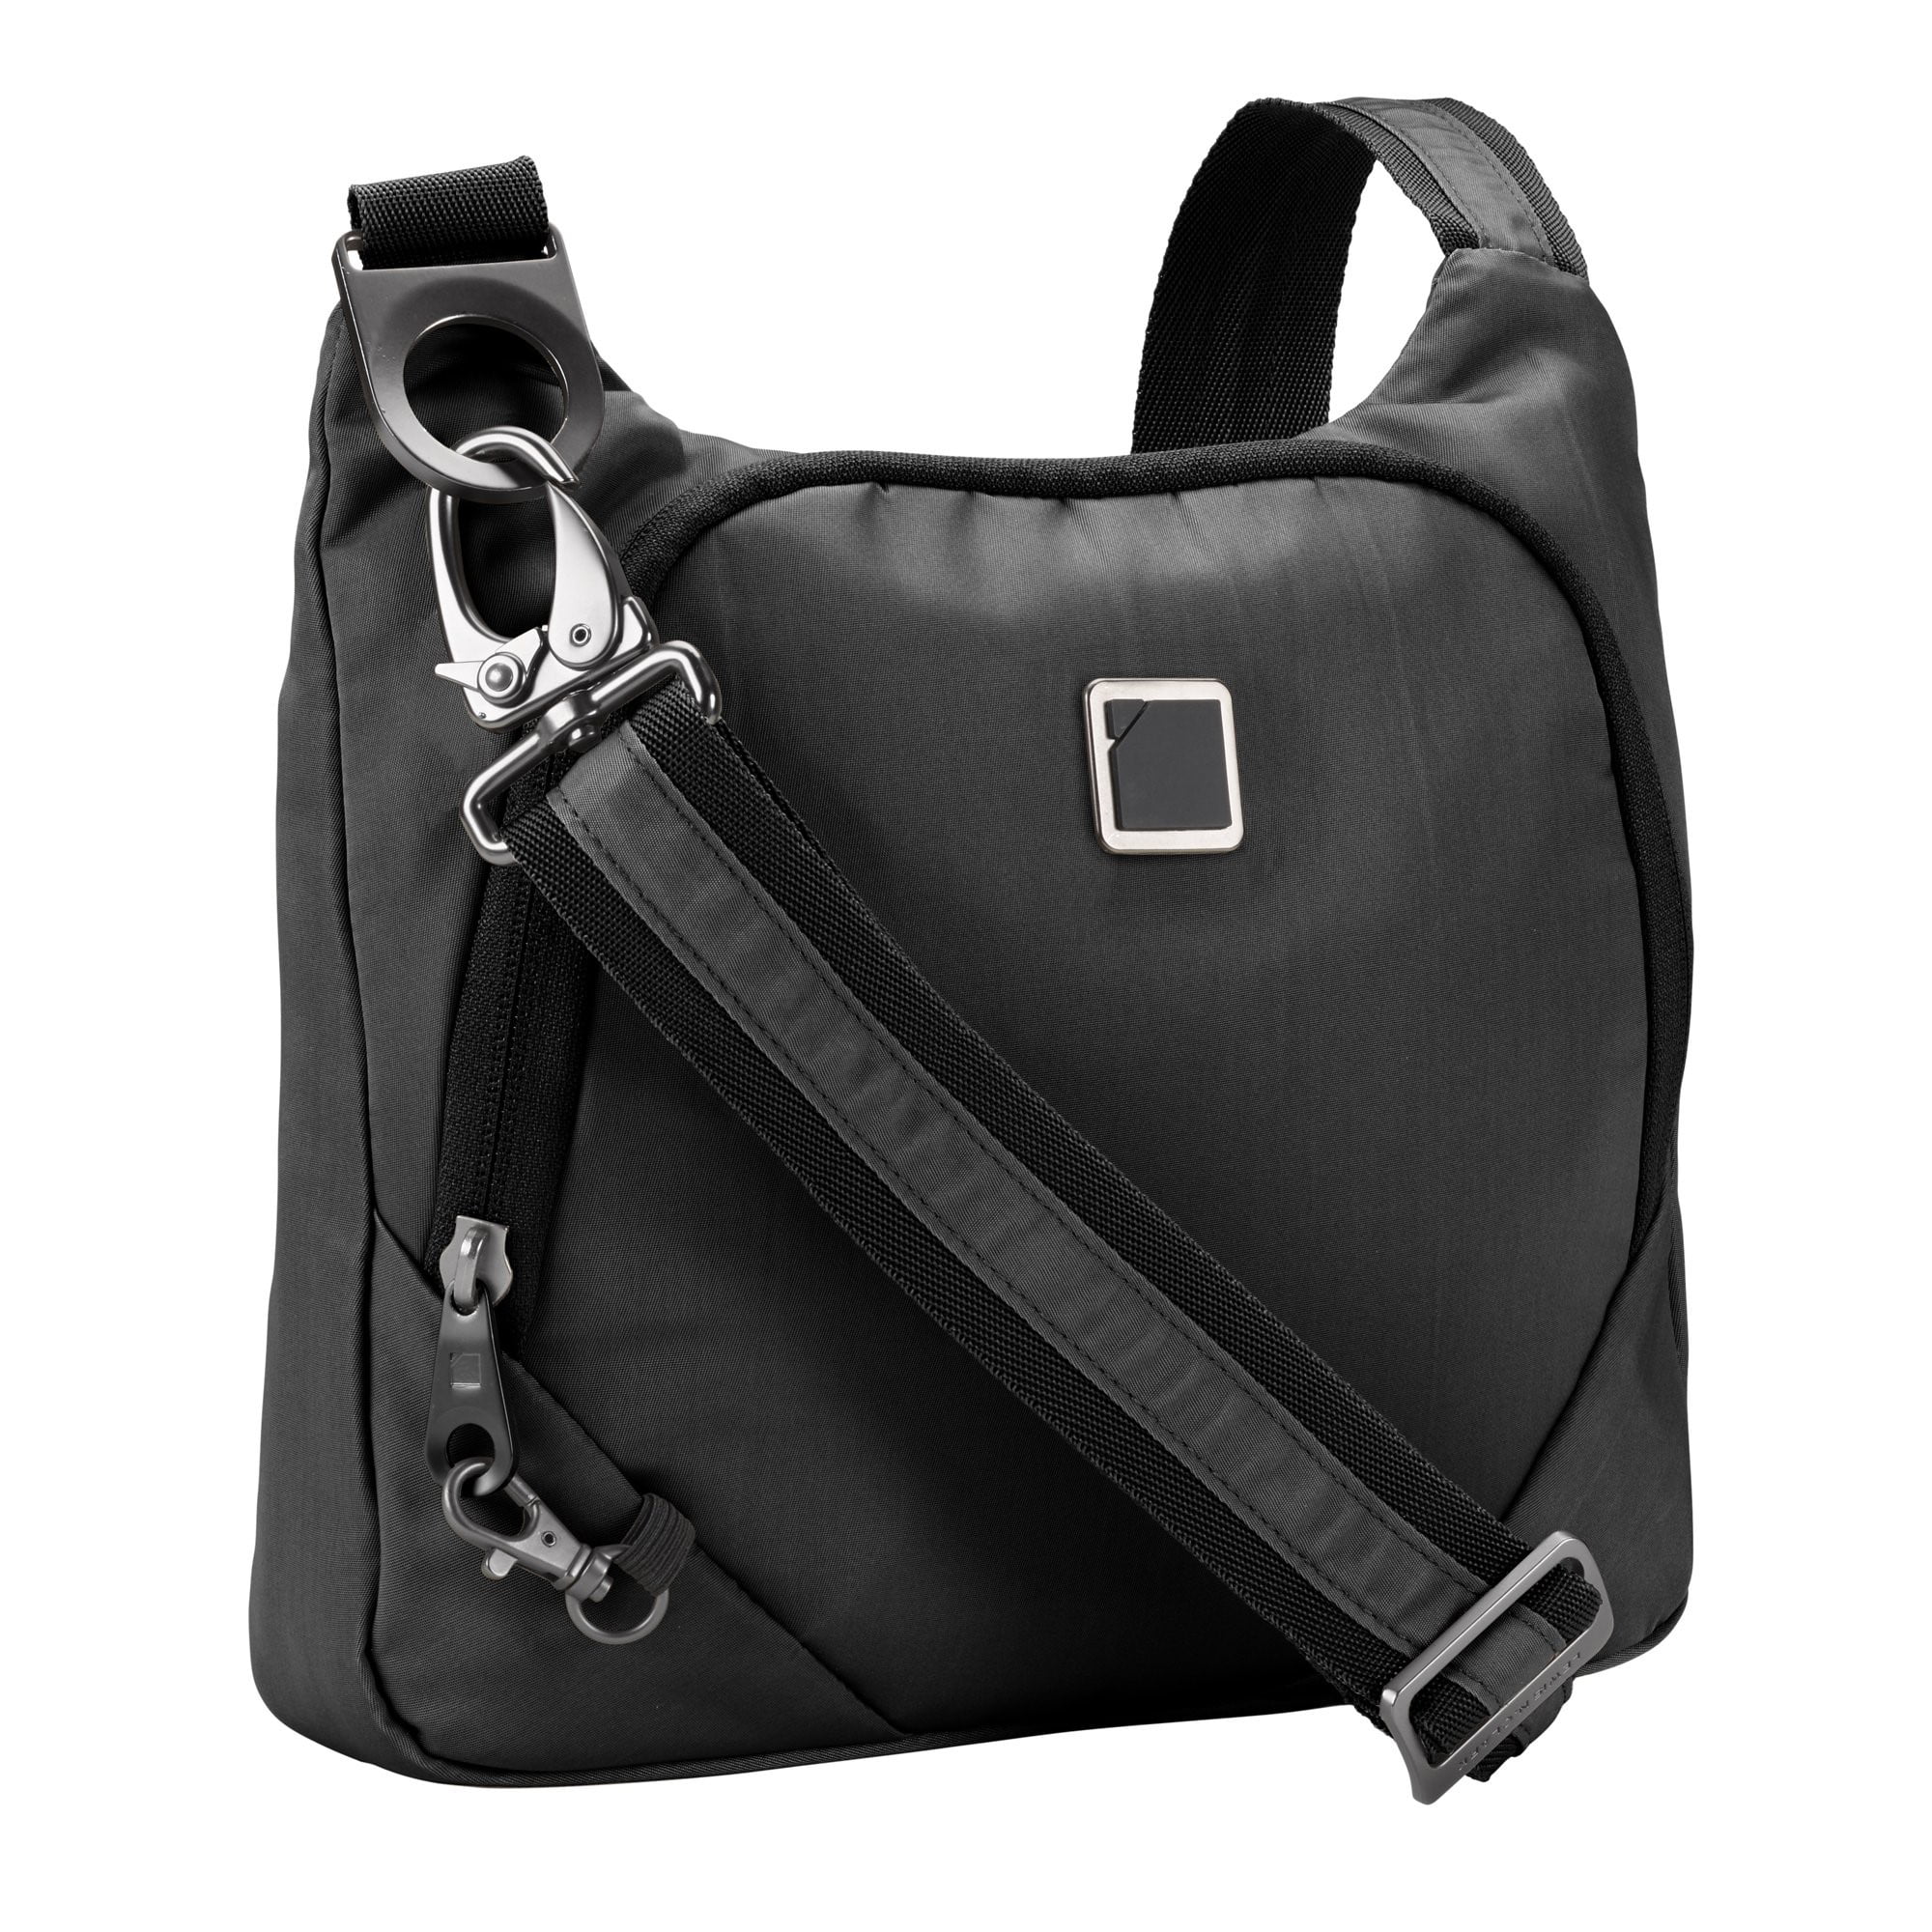 lewis n. clark anti-theft crossbody + sling bag for women, men, travel or with rfid blocking technology, slash resistant material, locking zippers & adjustable shoulder strap, onyx - Walmart.com